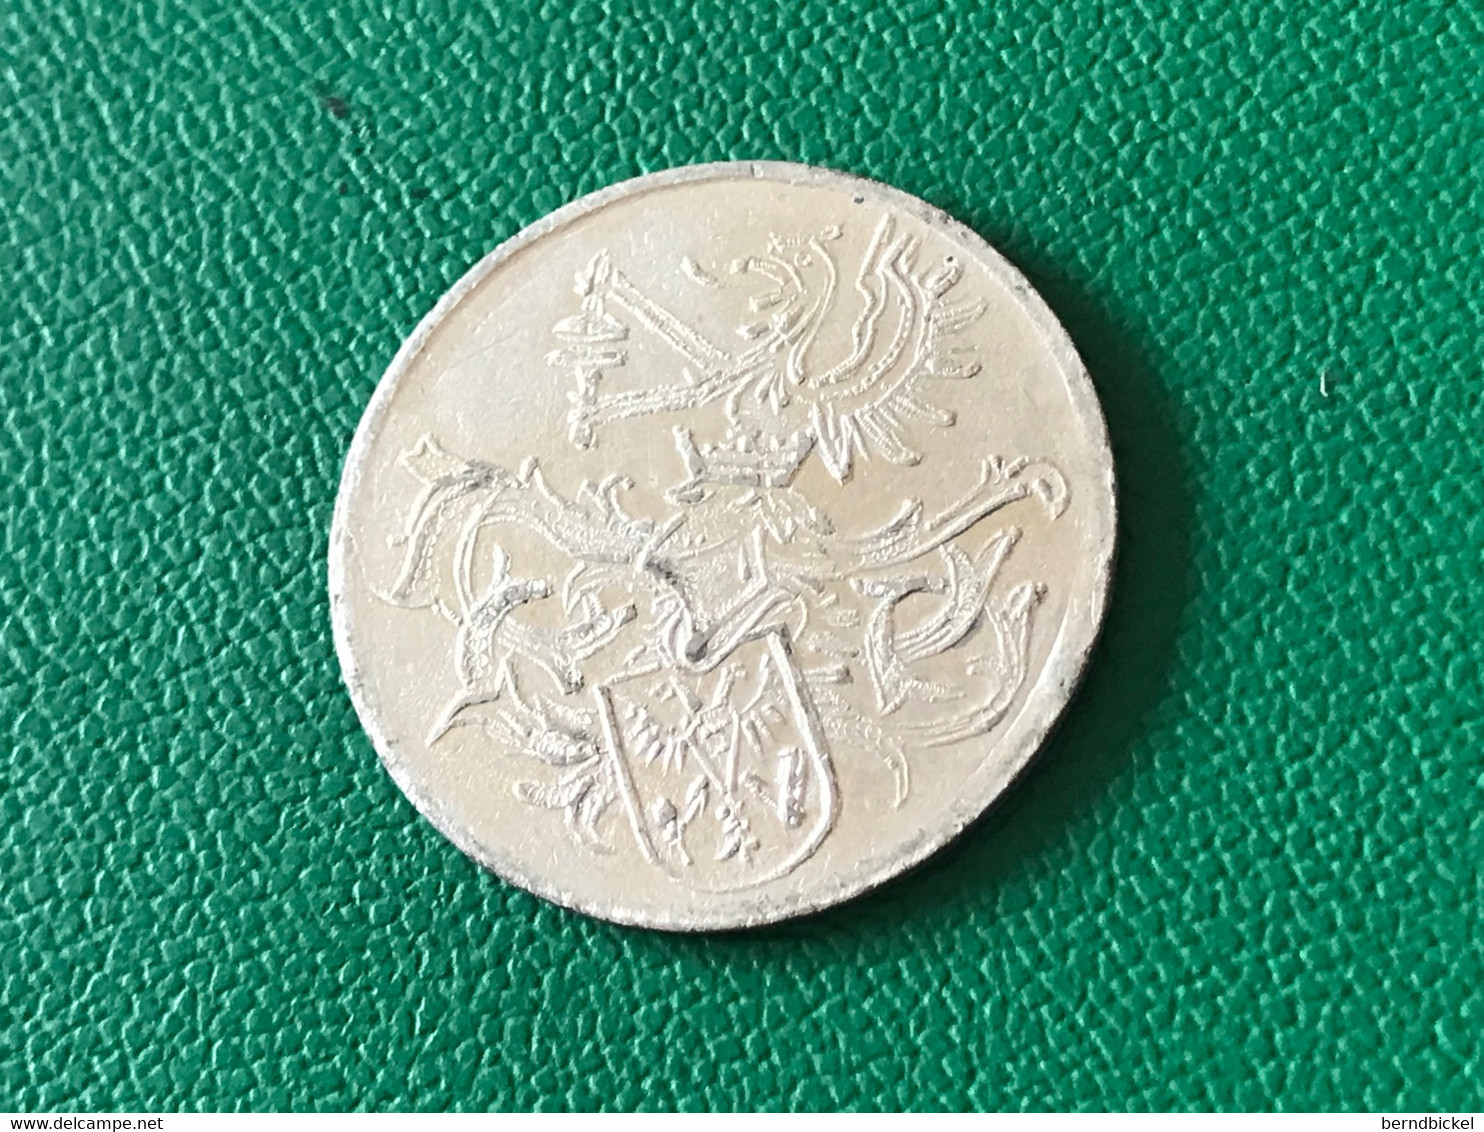 Münze Medaille West. Freilichtmuseum Hagen 1978 - Souvenir-Medaille (elongated Coins)